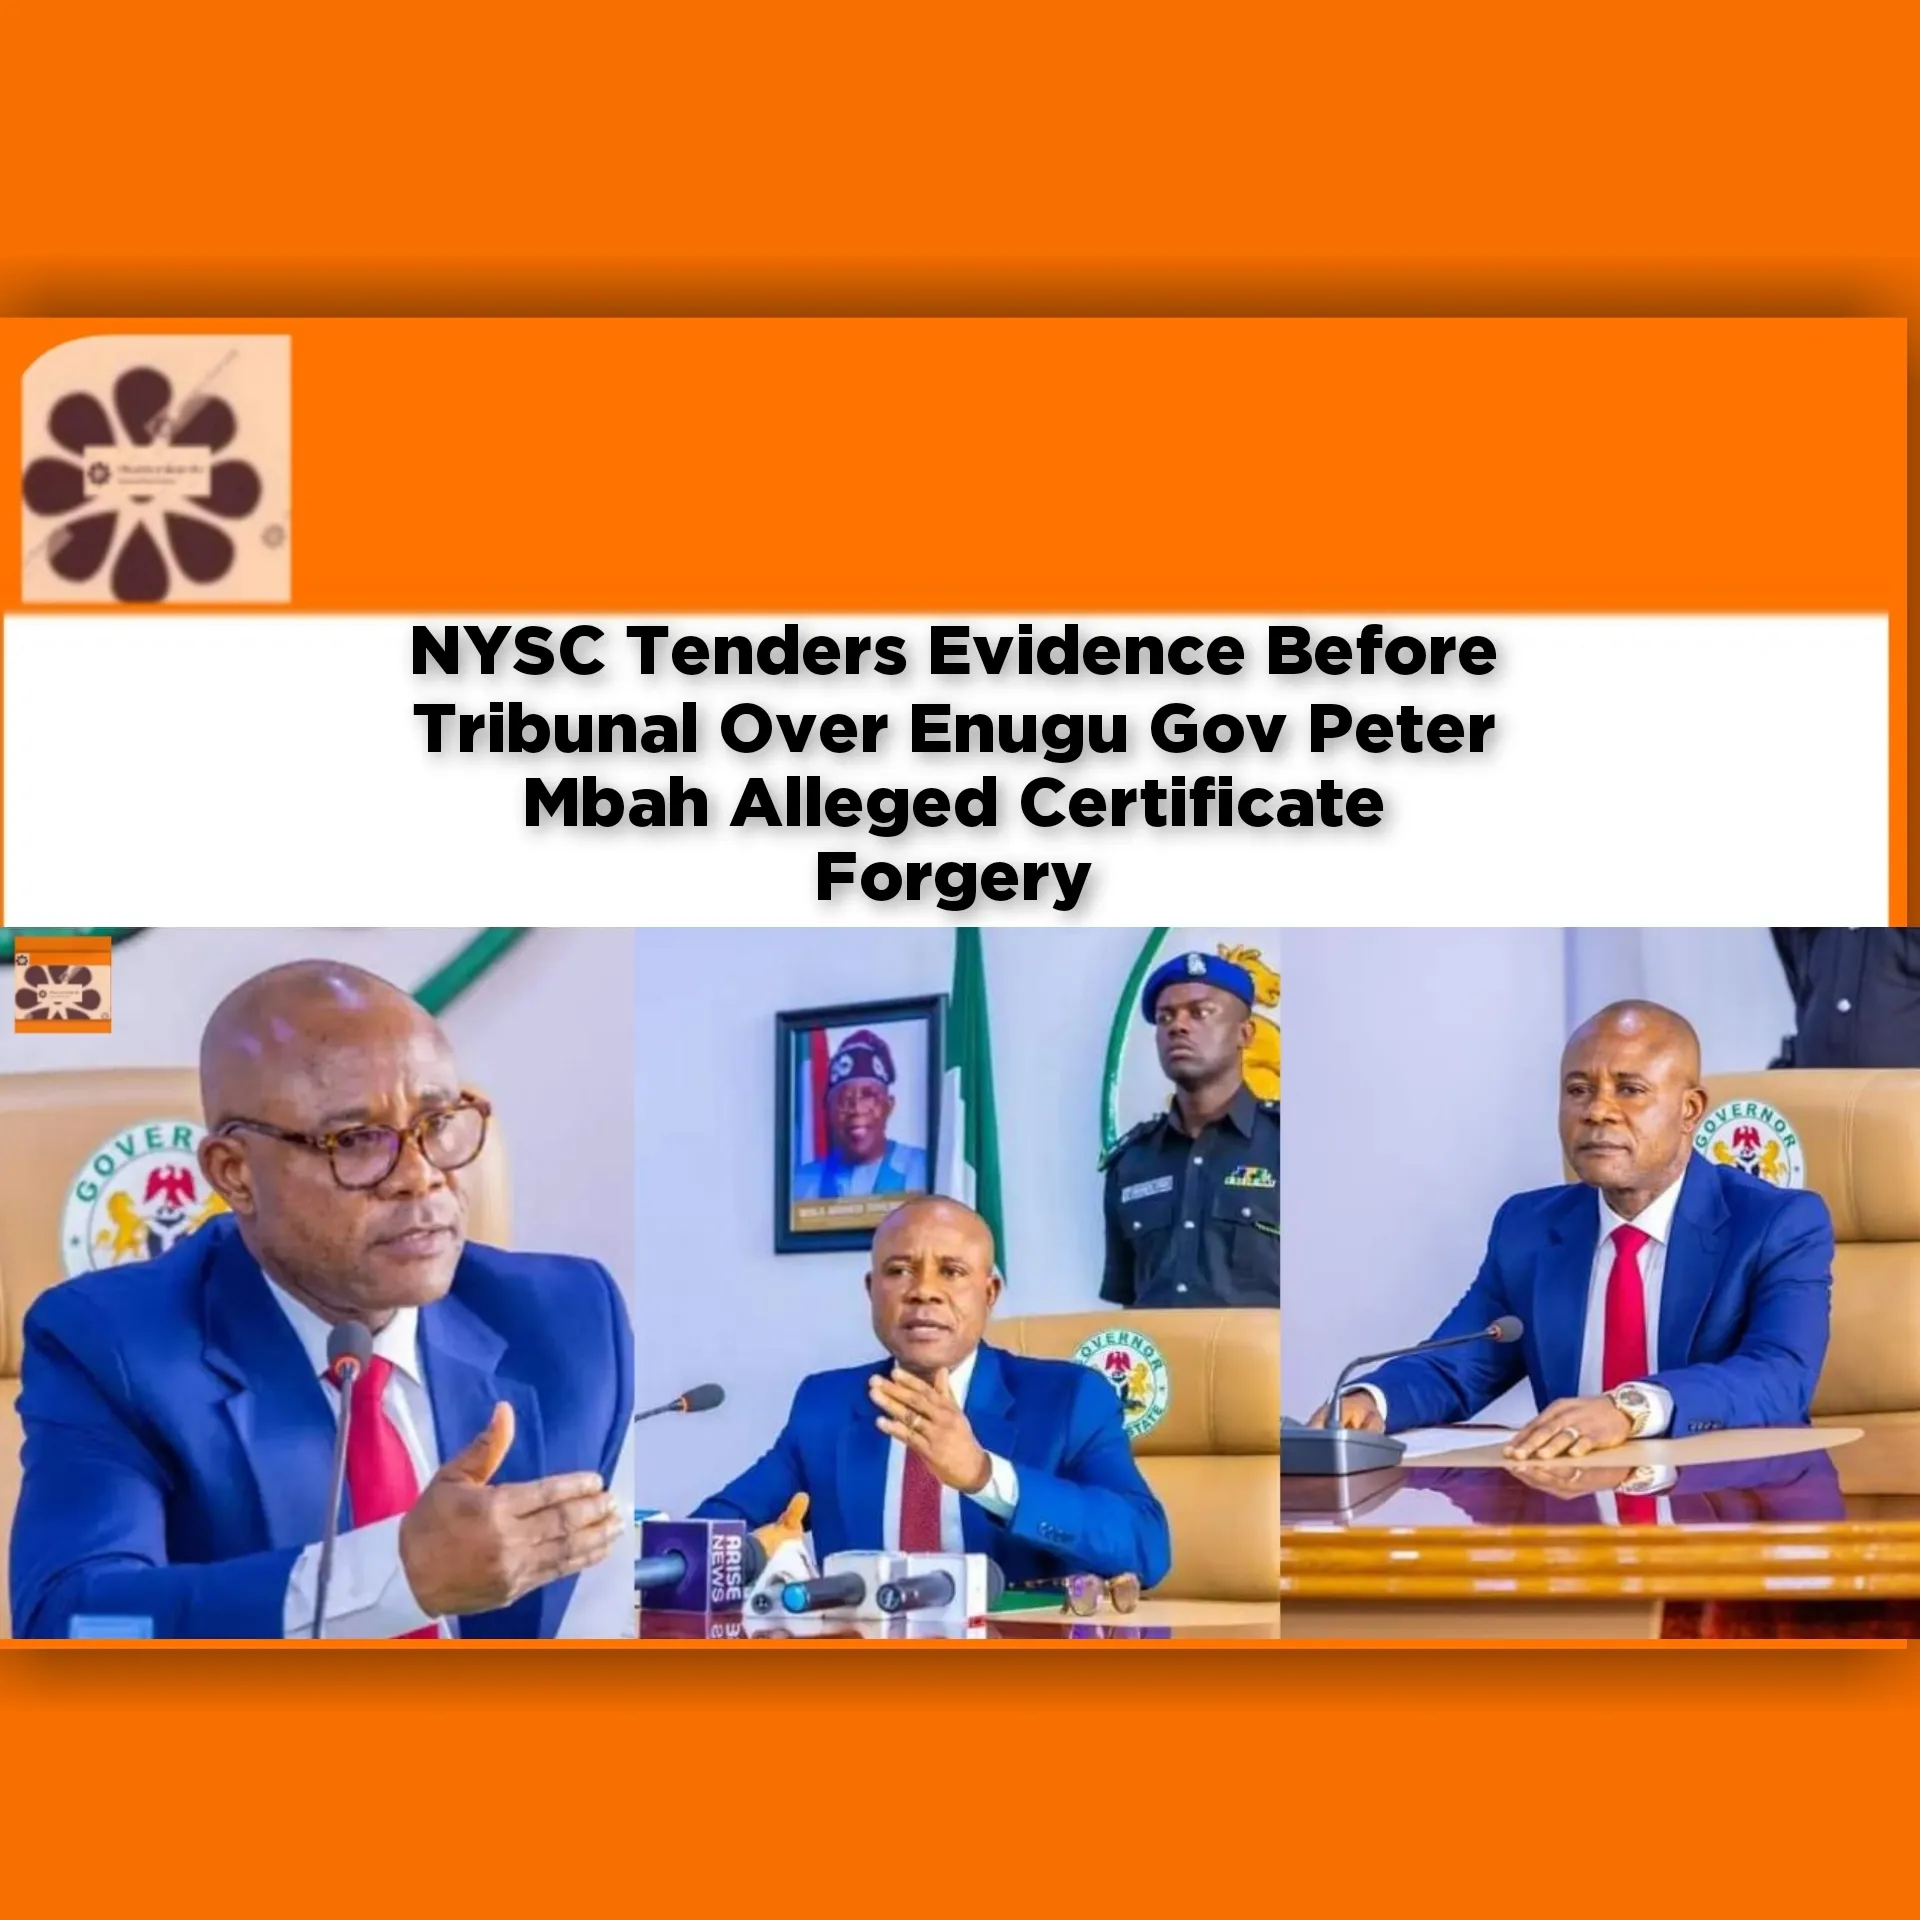 NYSC Tenders Evidence Before Tribunal Over Enugu Gov Peter Mbah Alleged Certificate Forgery ~ OsazuwaAkonedo ###LP #election #Enugu #Forgery #Mbah #NYSC #Peter #Tribunal